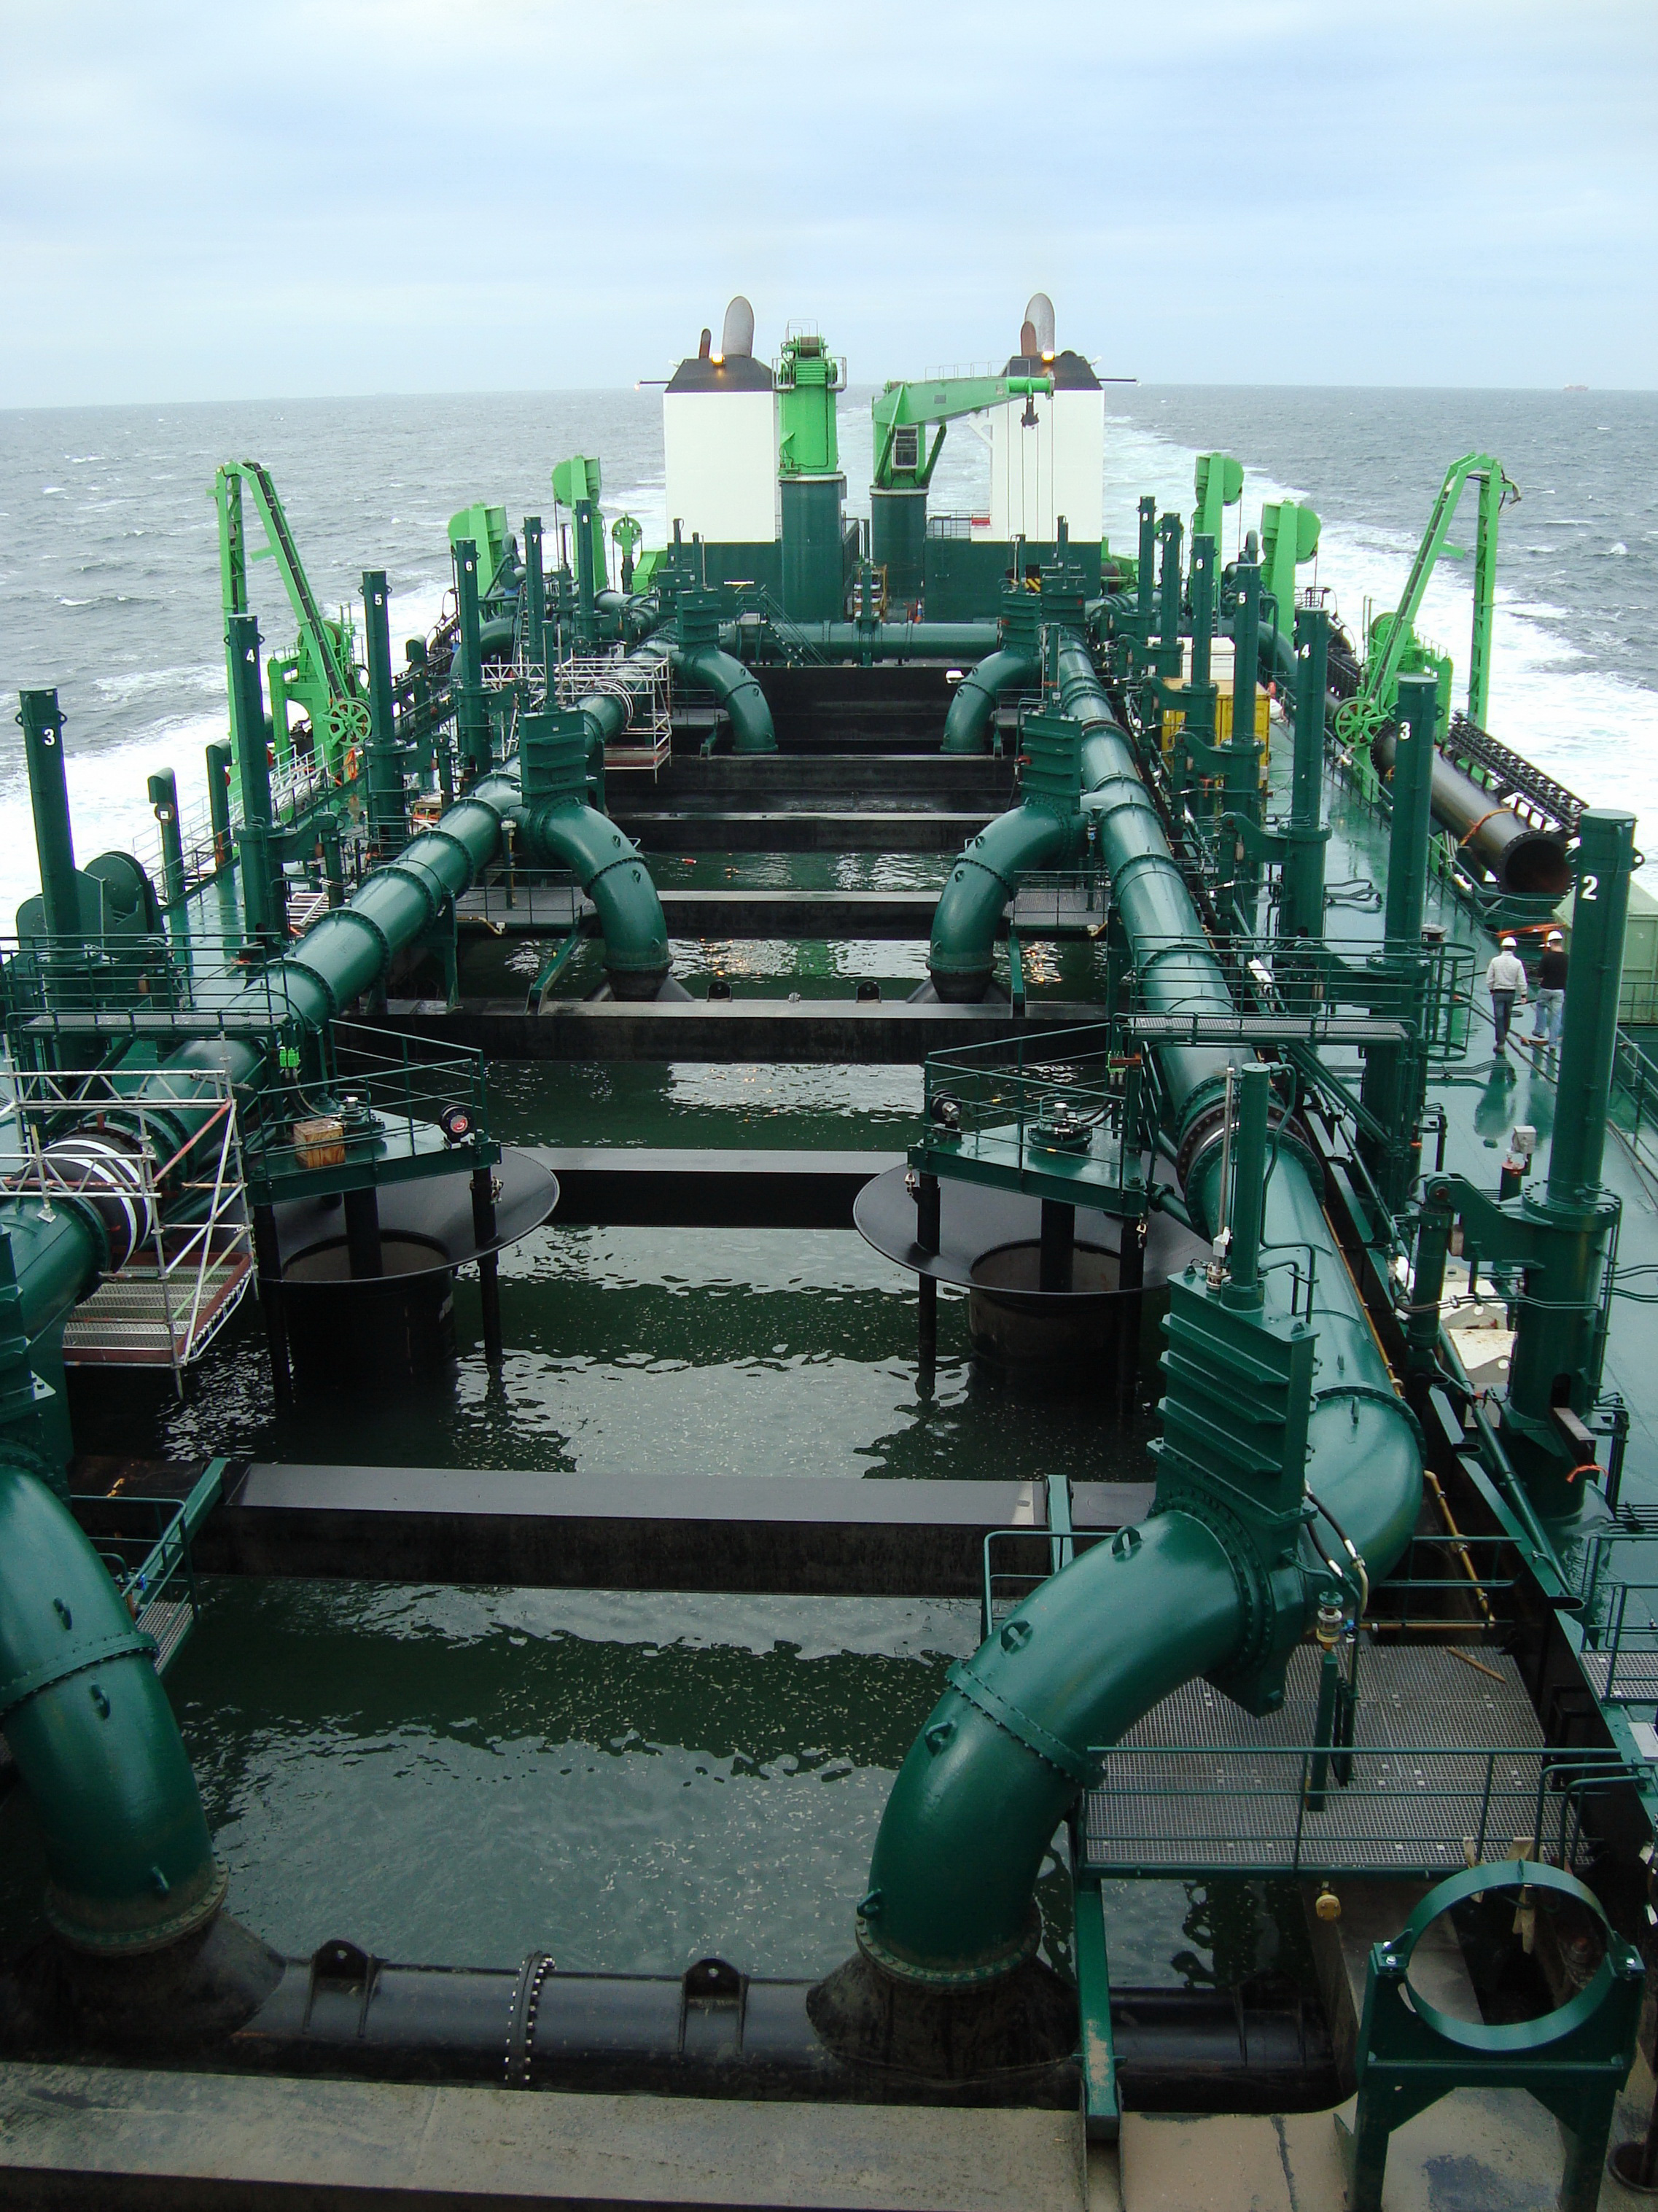 Onboard pipelines dredge valves